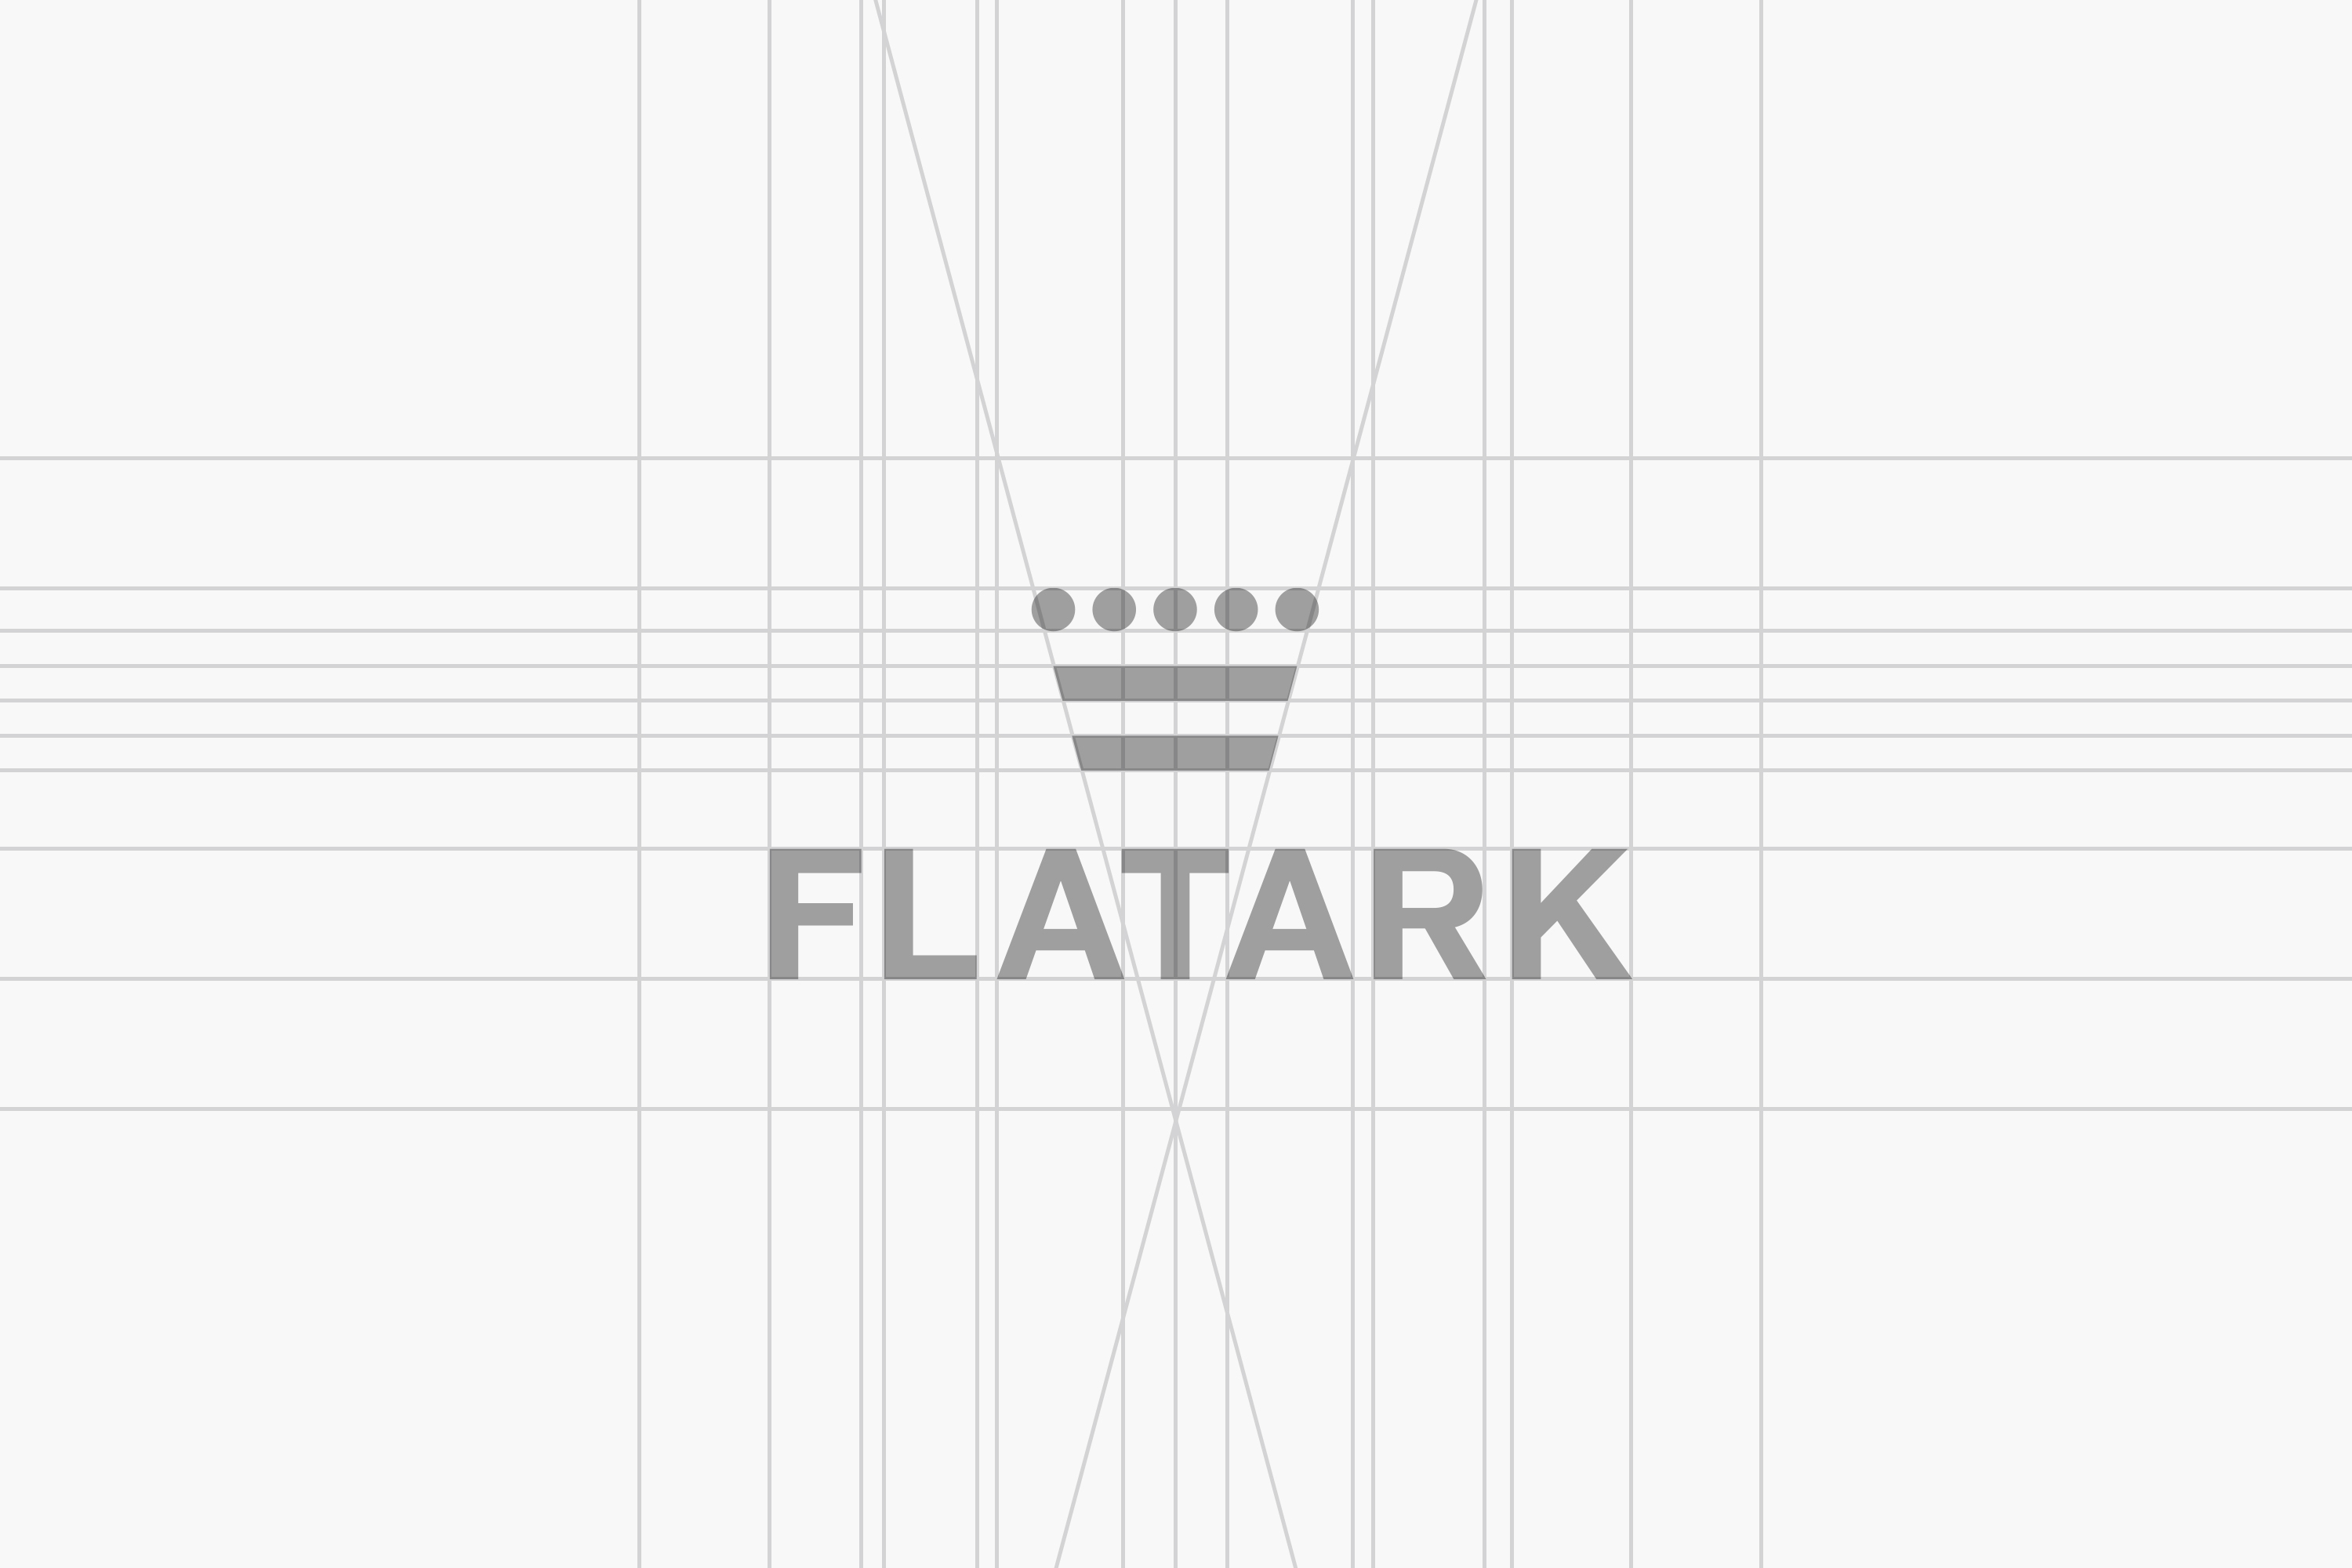 flatark_logo_grid_system_design